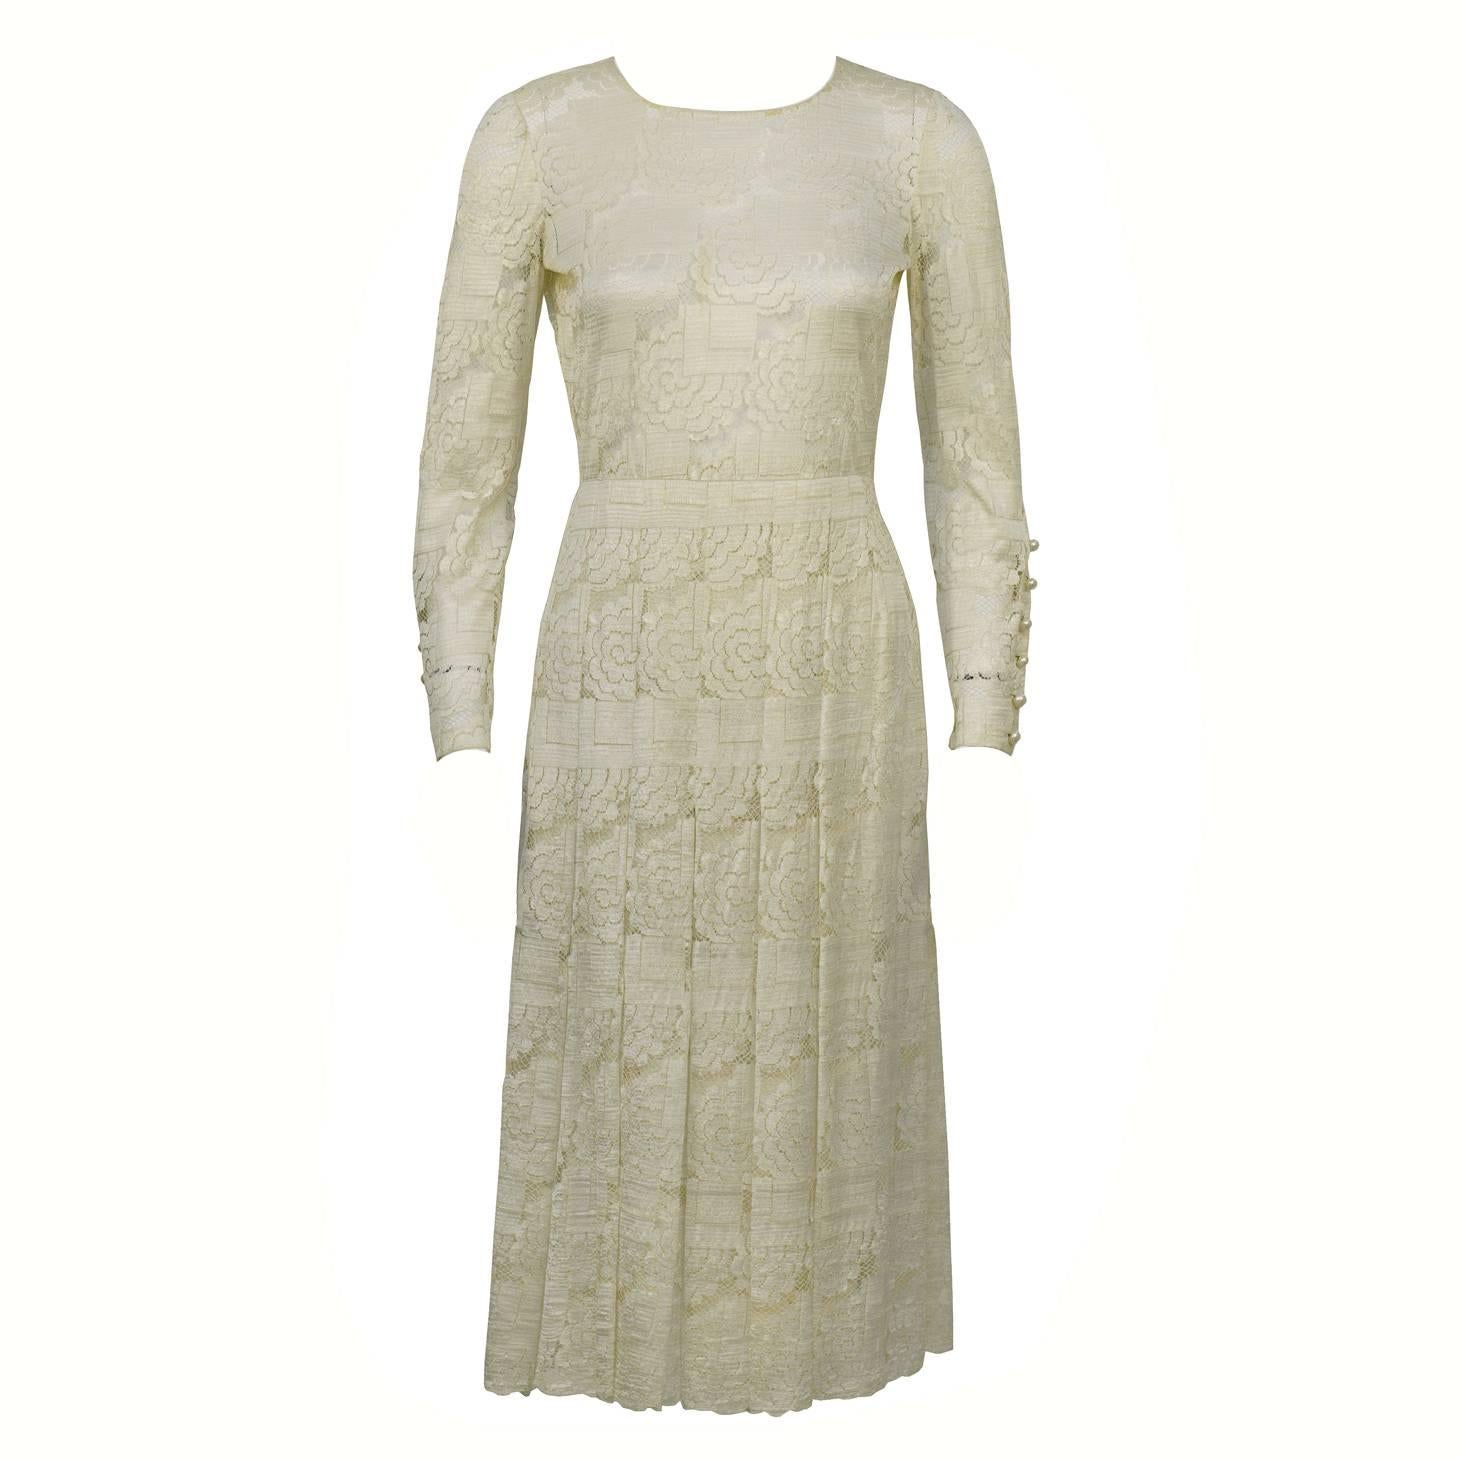 1960s Cream Lace Tea Length Dress